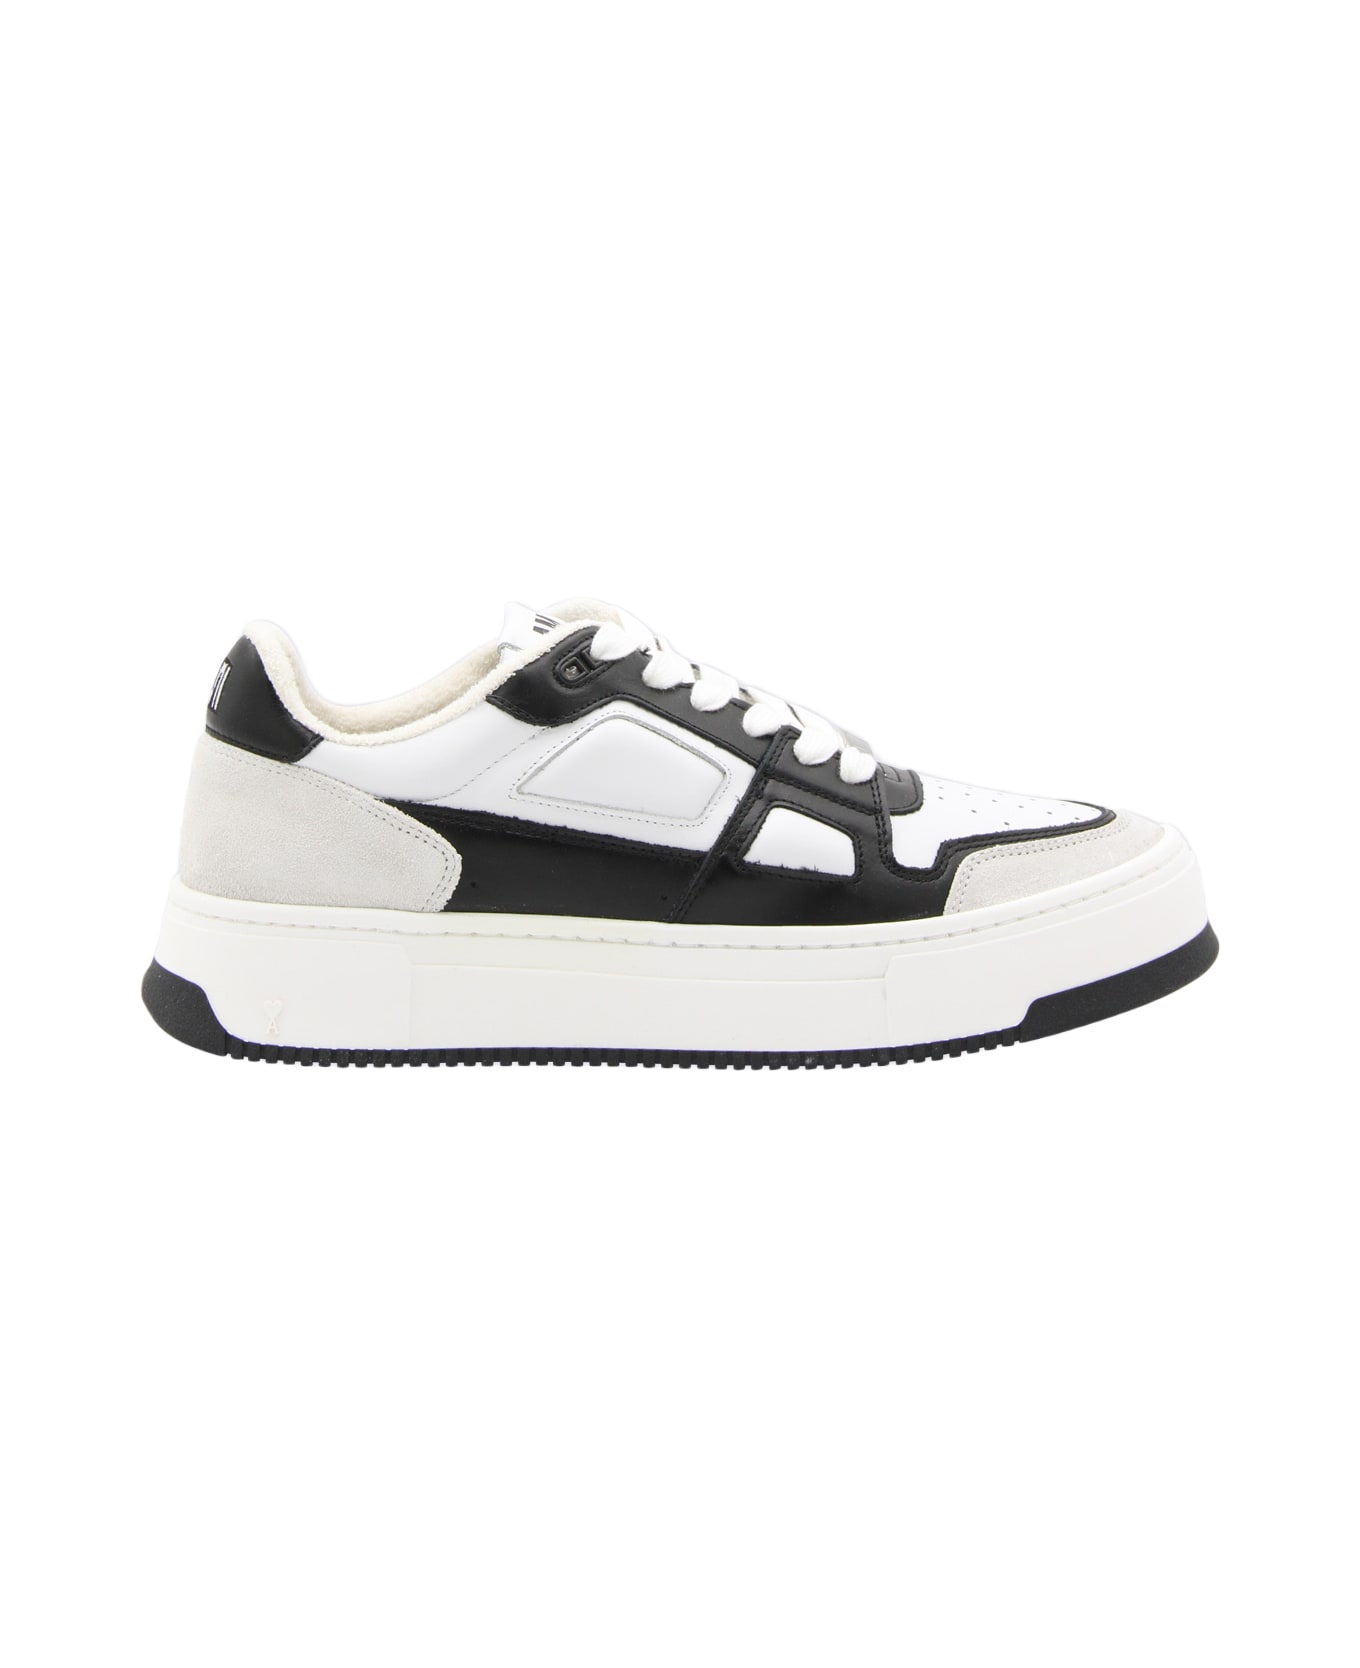 Ami Alexandre Mattiussi Black And White Leather Arcade Sneakers - White